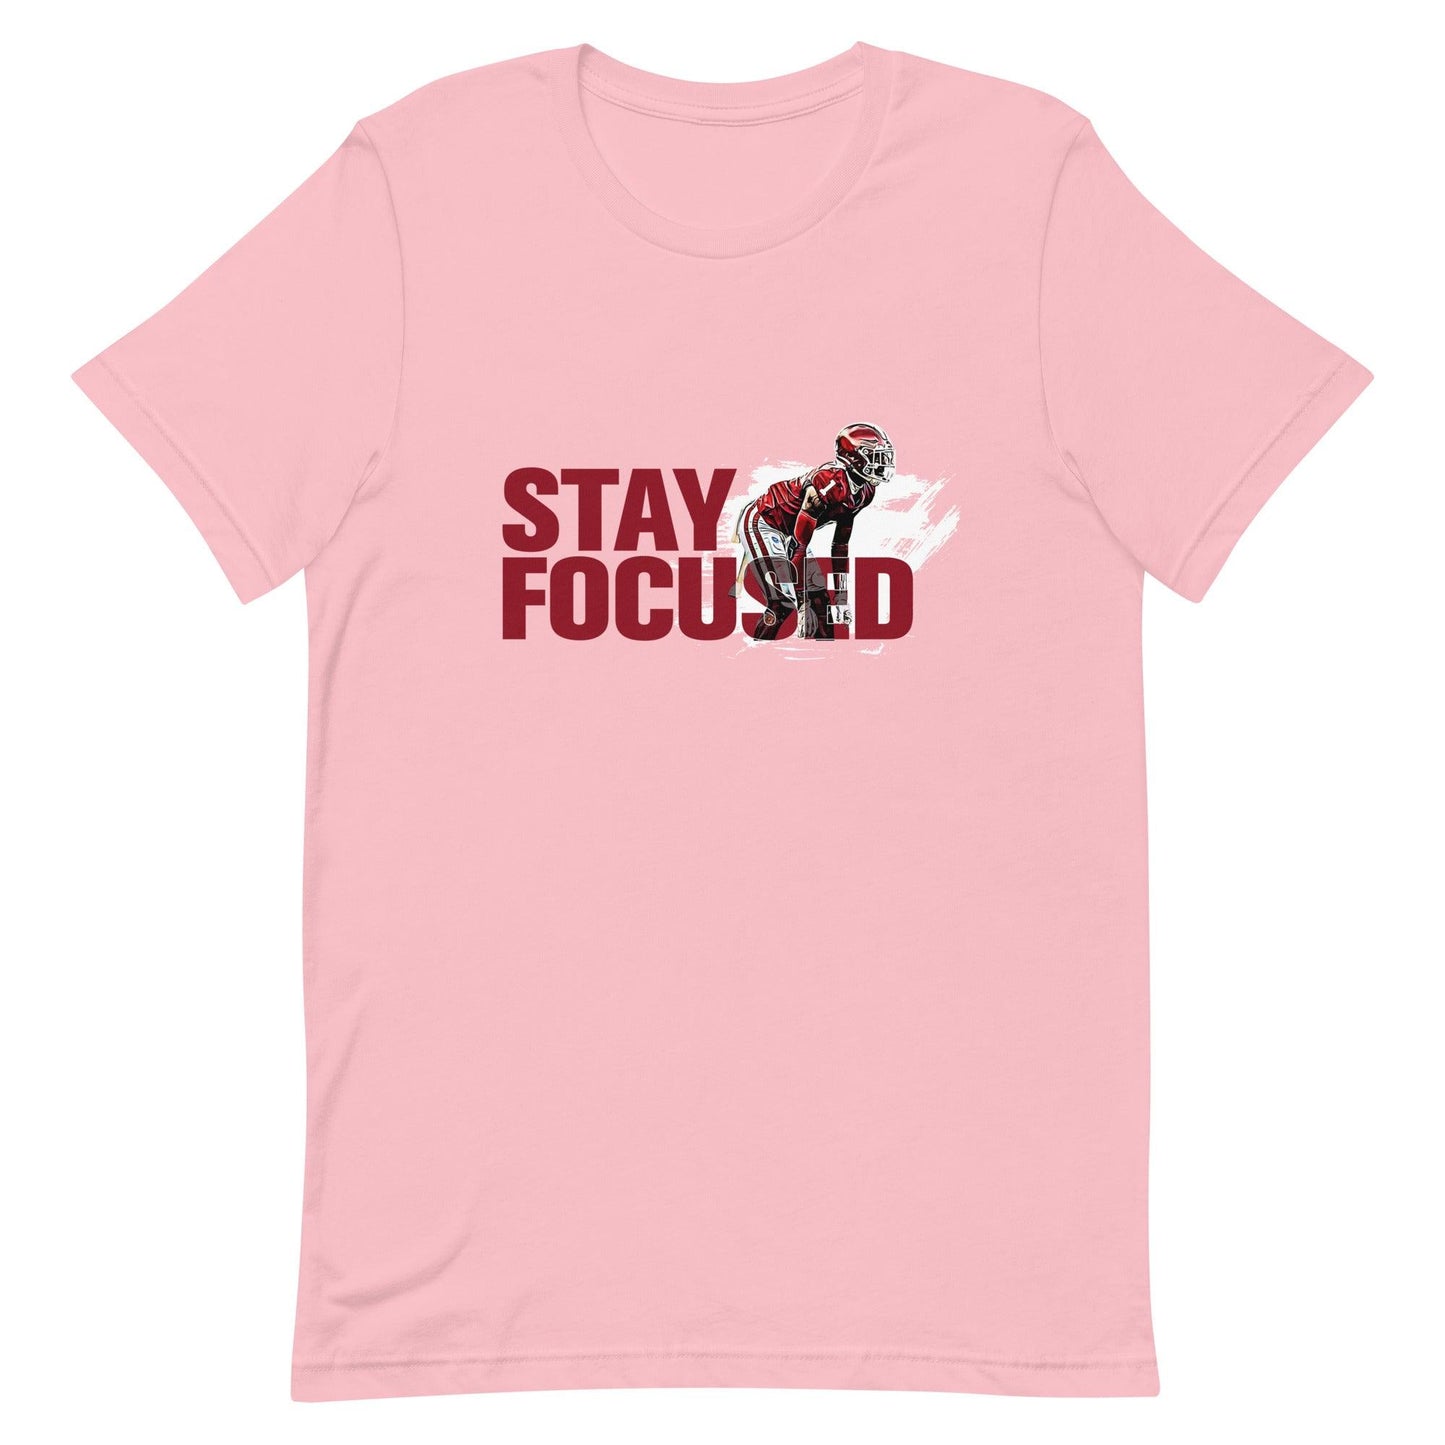 Joshua Eaton "Stay Focused" t-shirt - Fan Arch